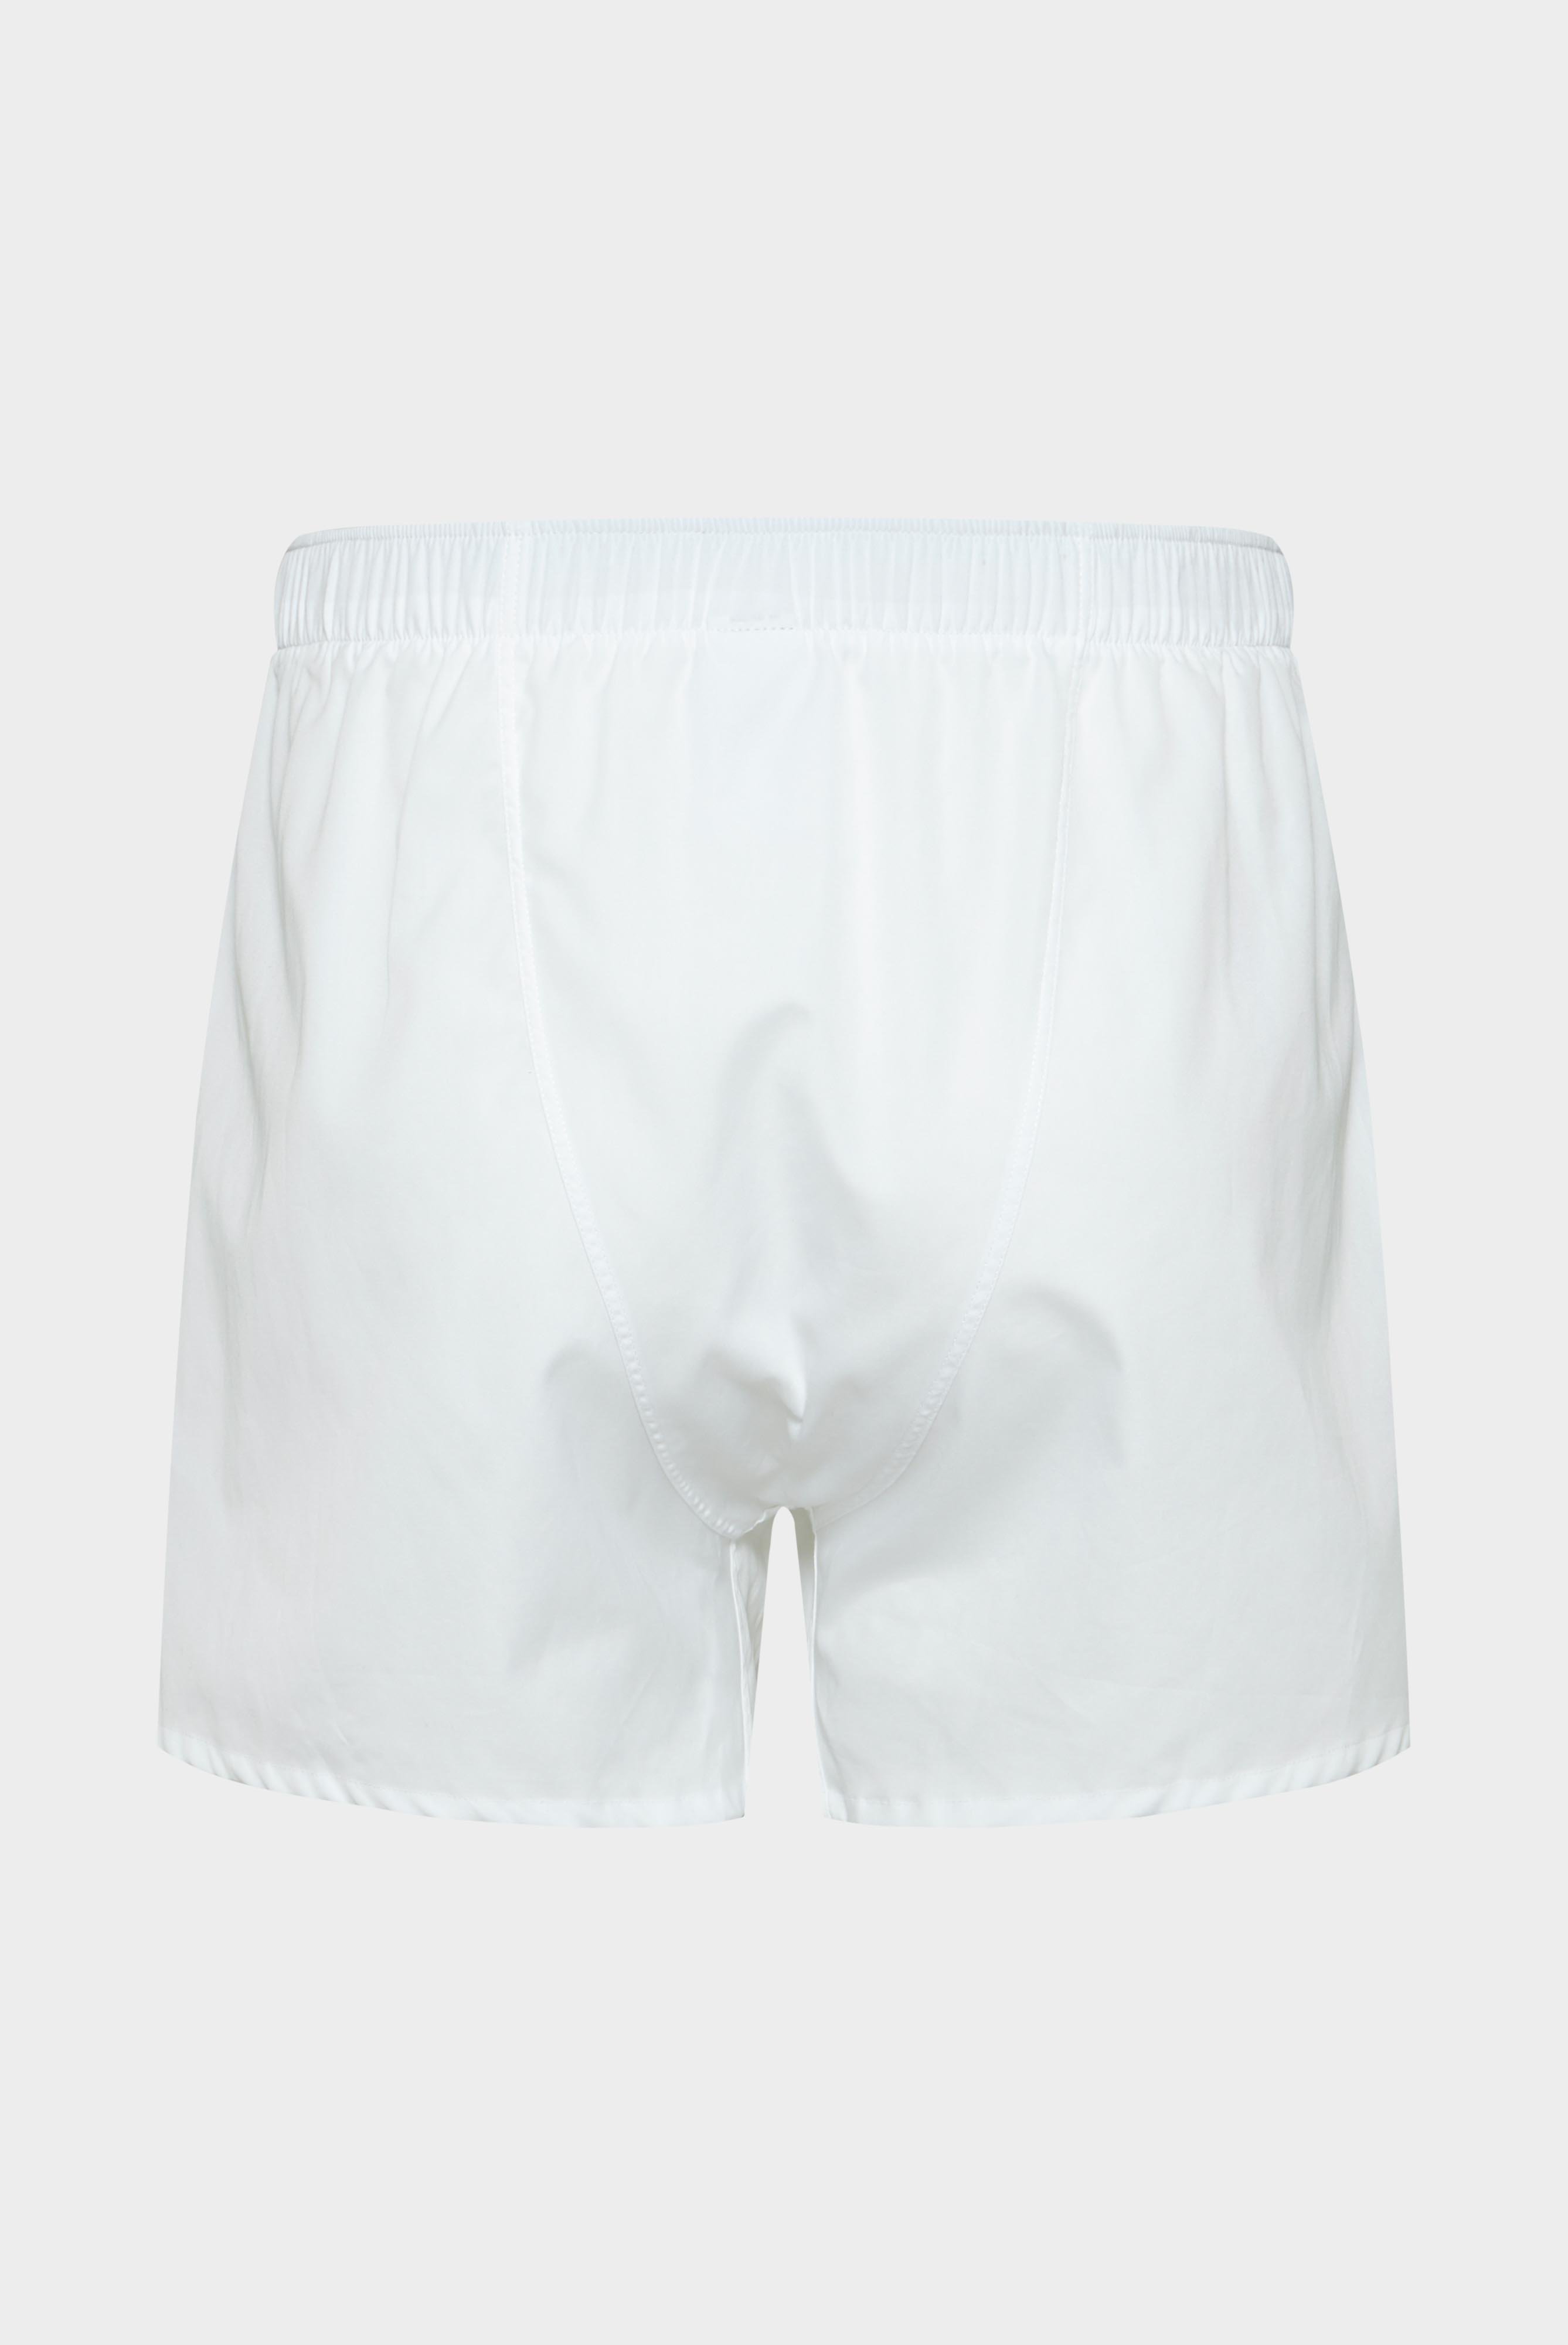 Underwear+Fil-a-Fil Boxer Shorts+91.1100..140766.000.46